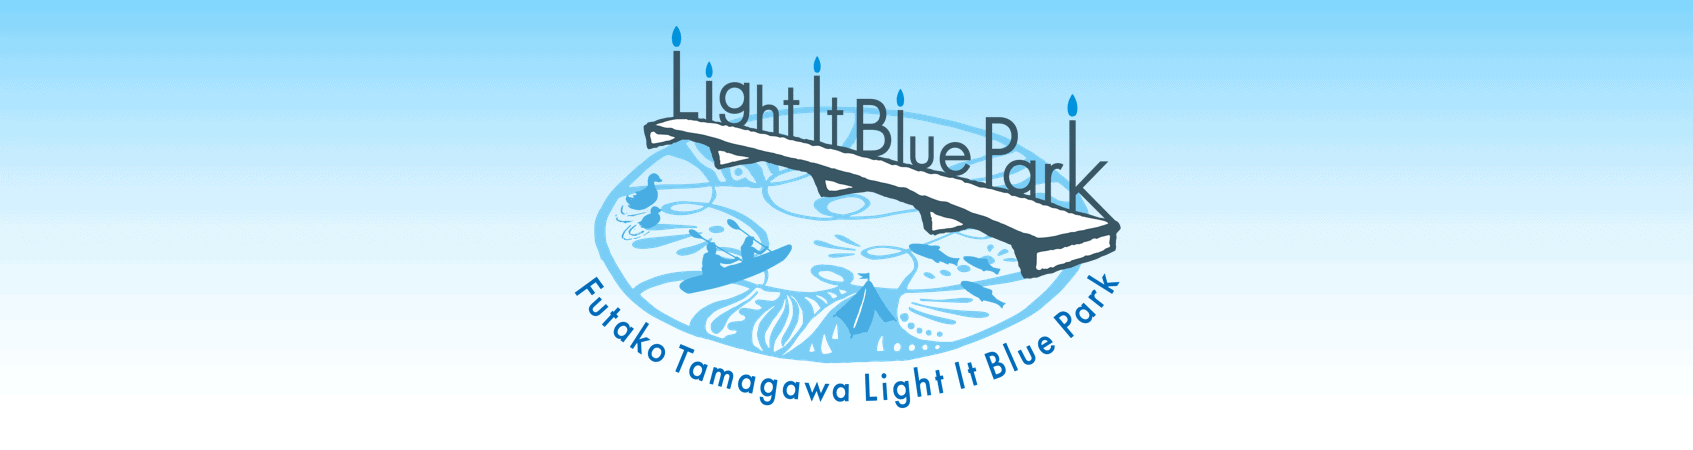 Futako Tamagawa Light It Blue Park